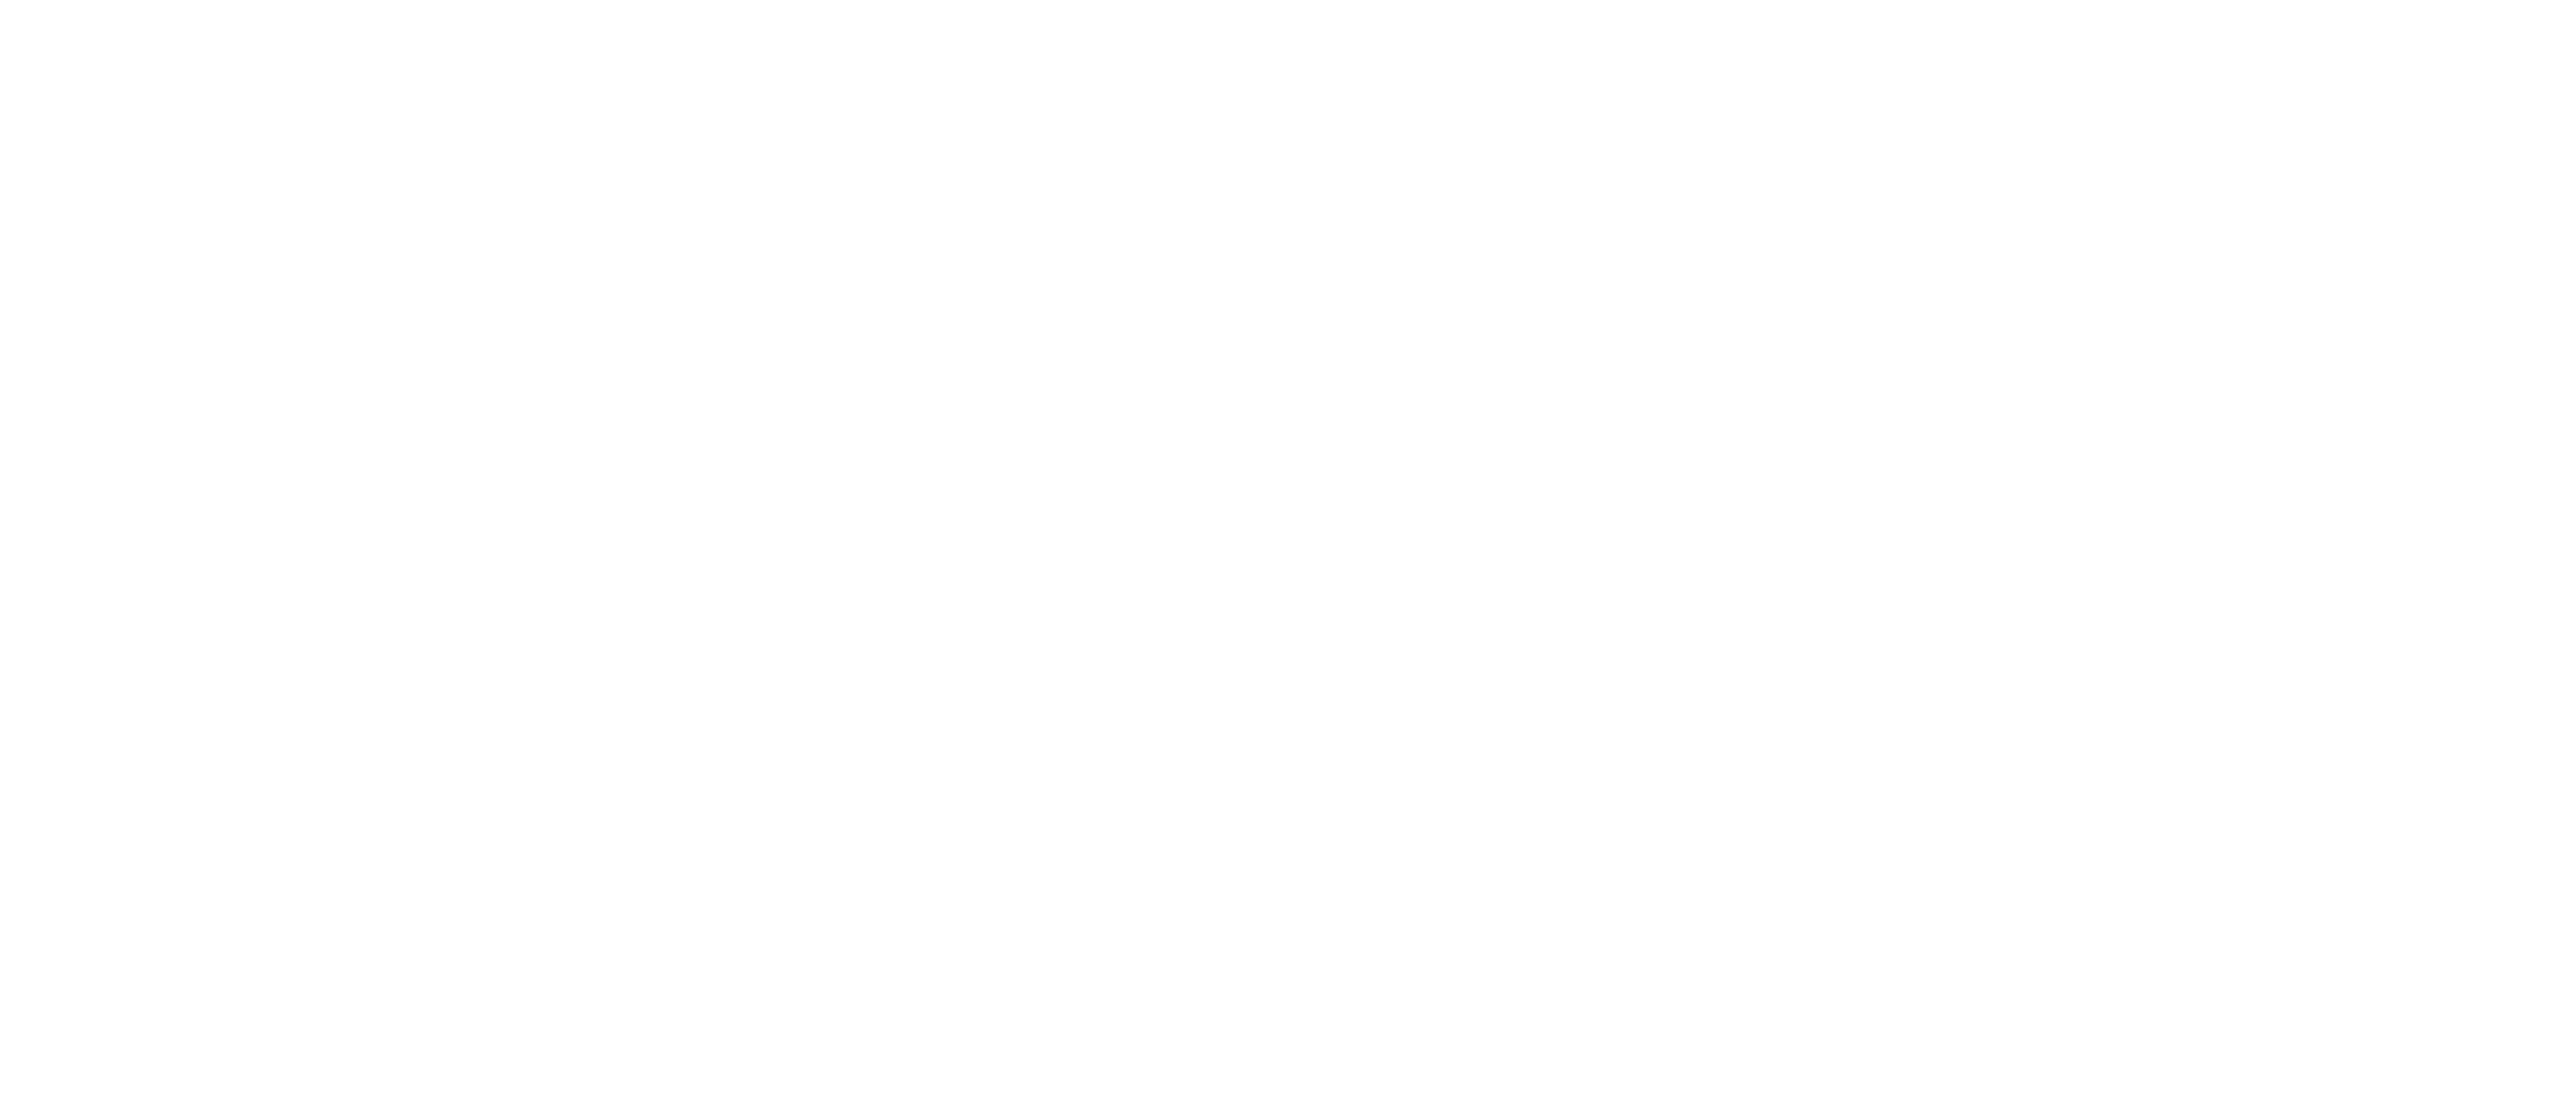 Flux VJ logo - Video DJ Wedding DJ